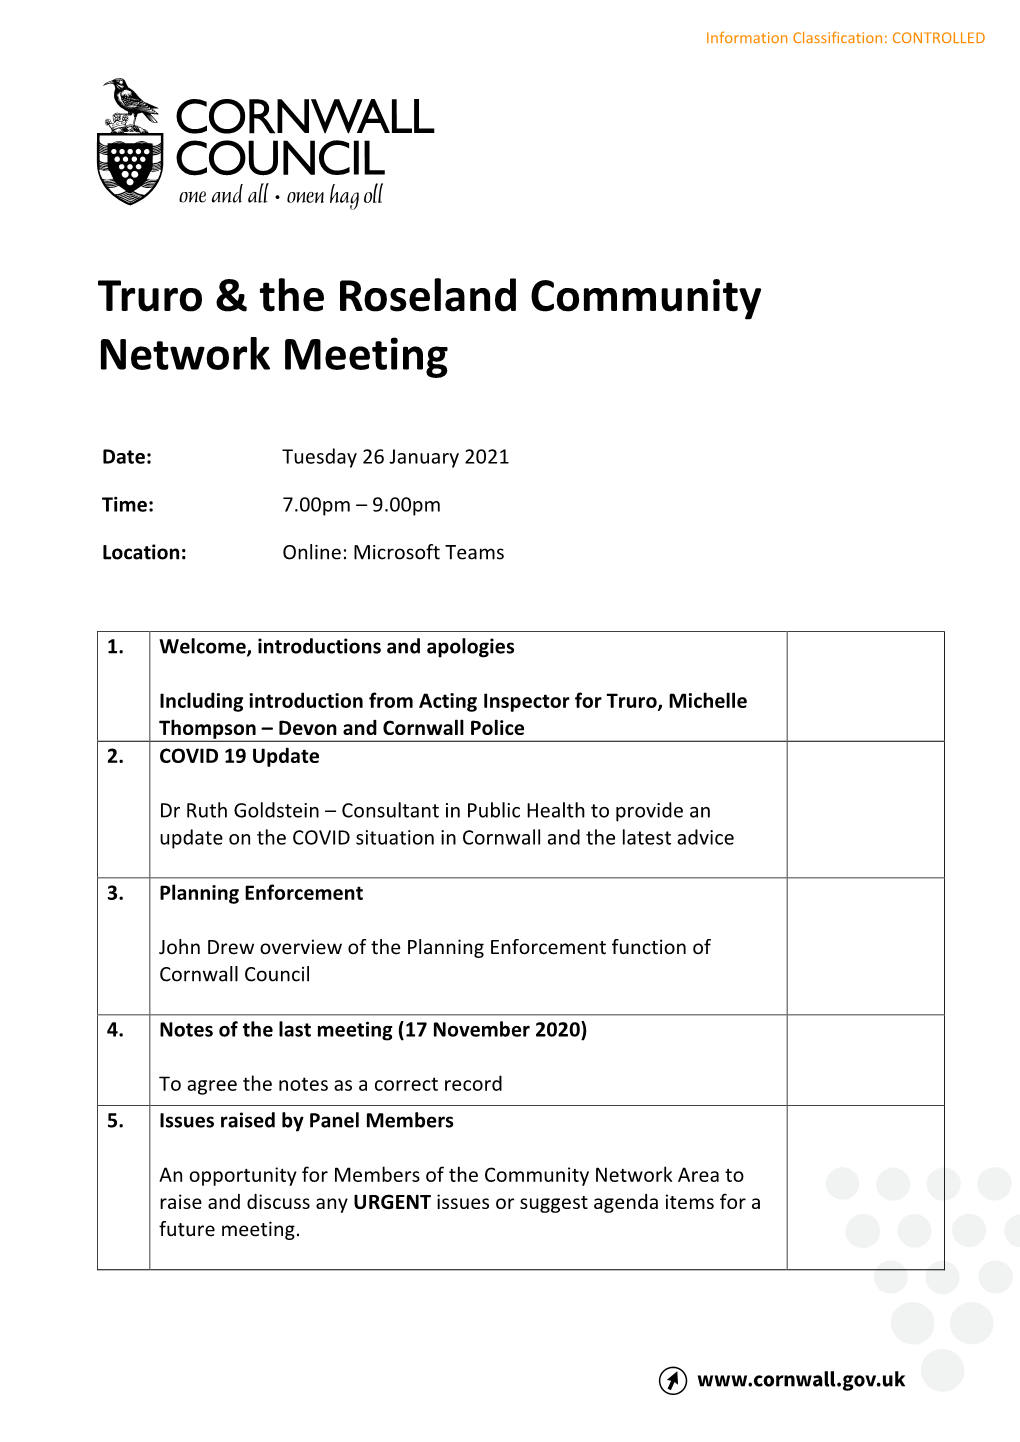 Truro & the Roseland Community Network Meeting